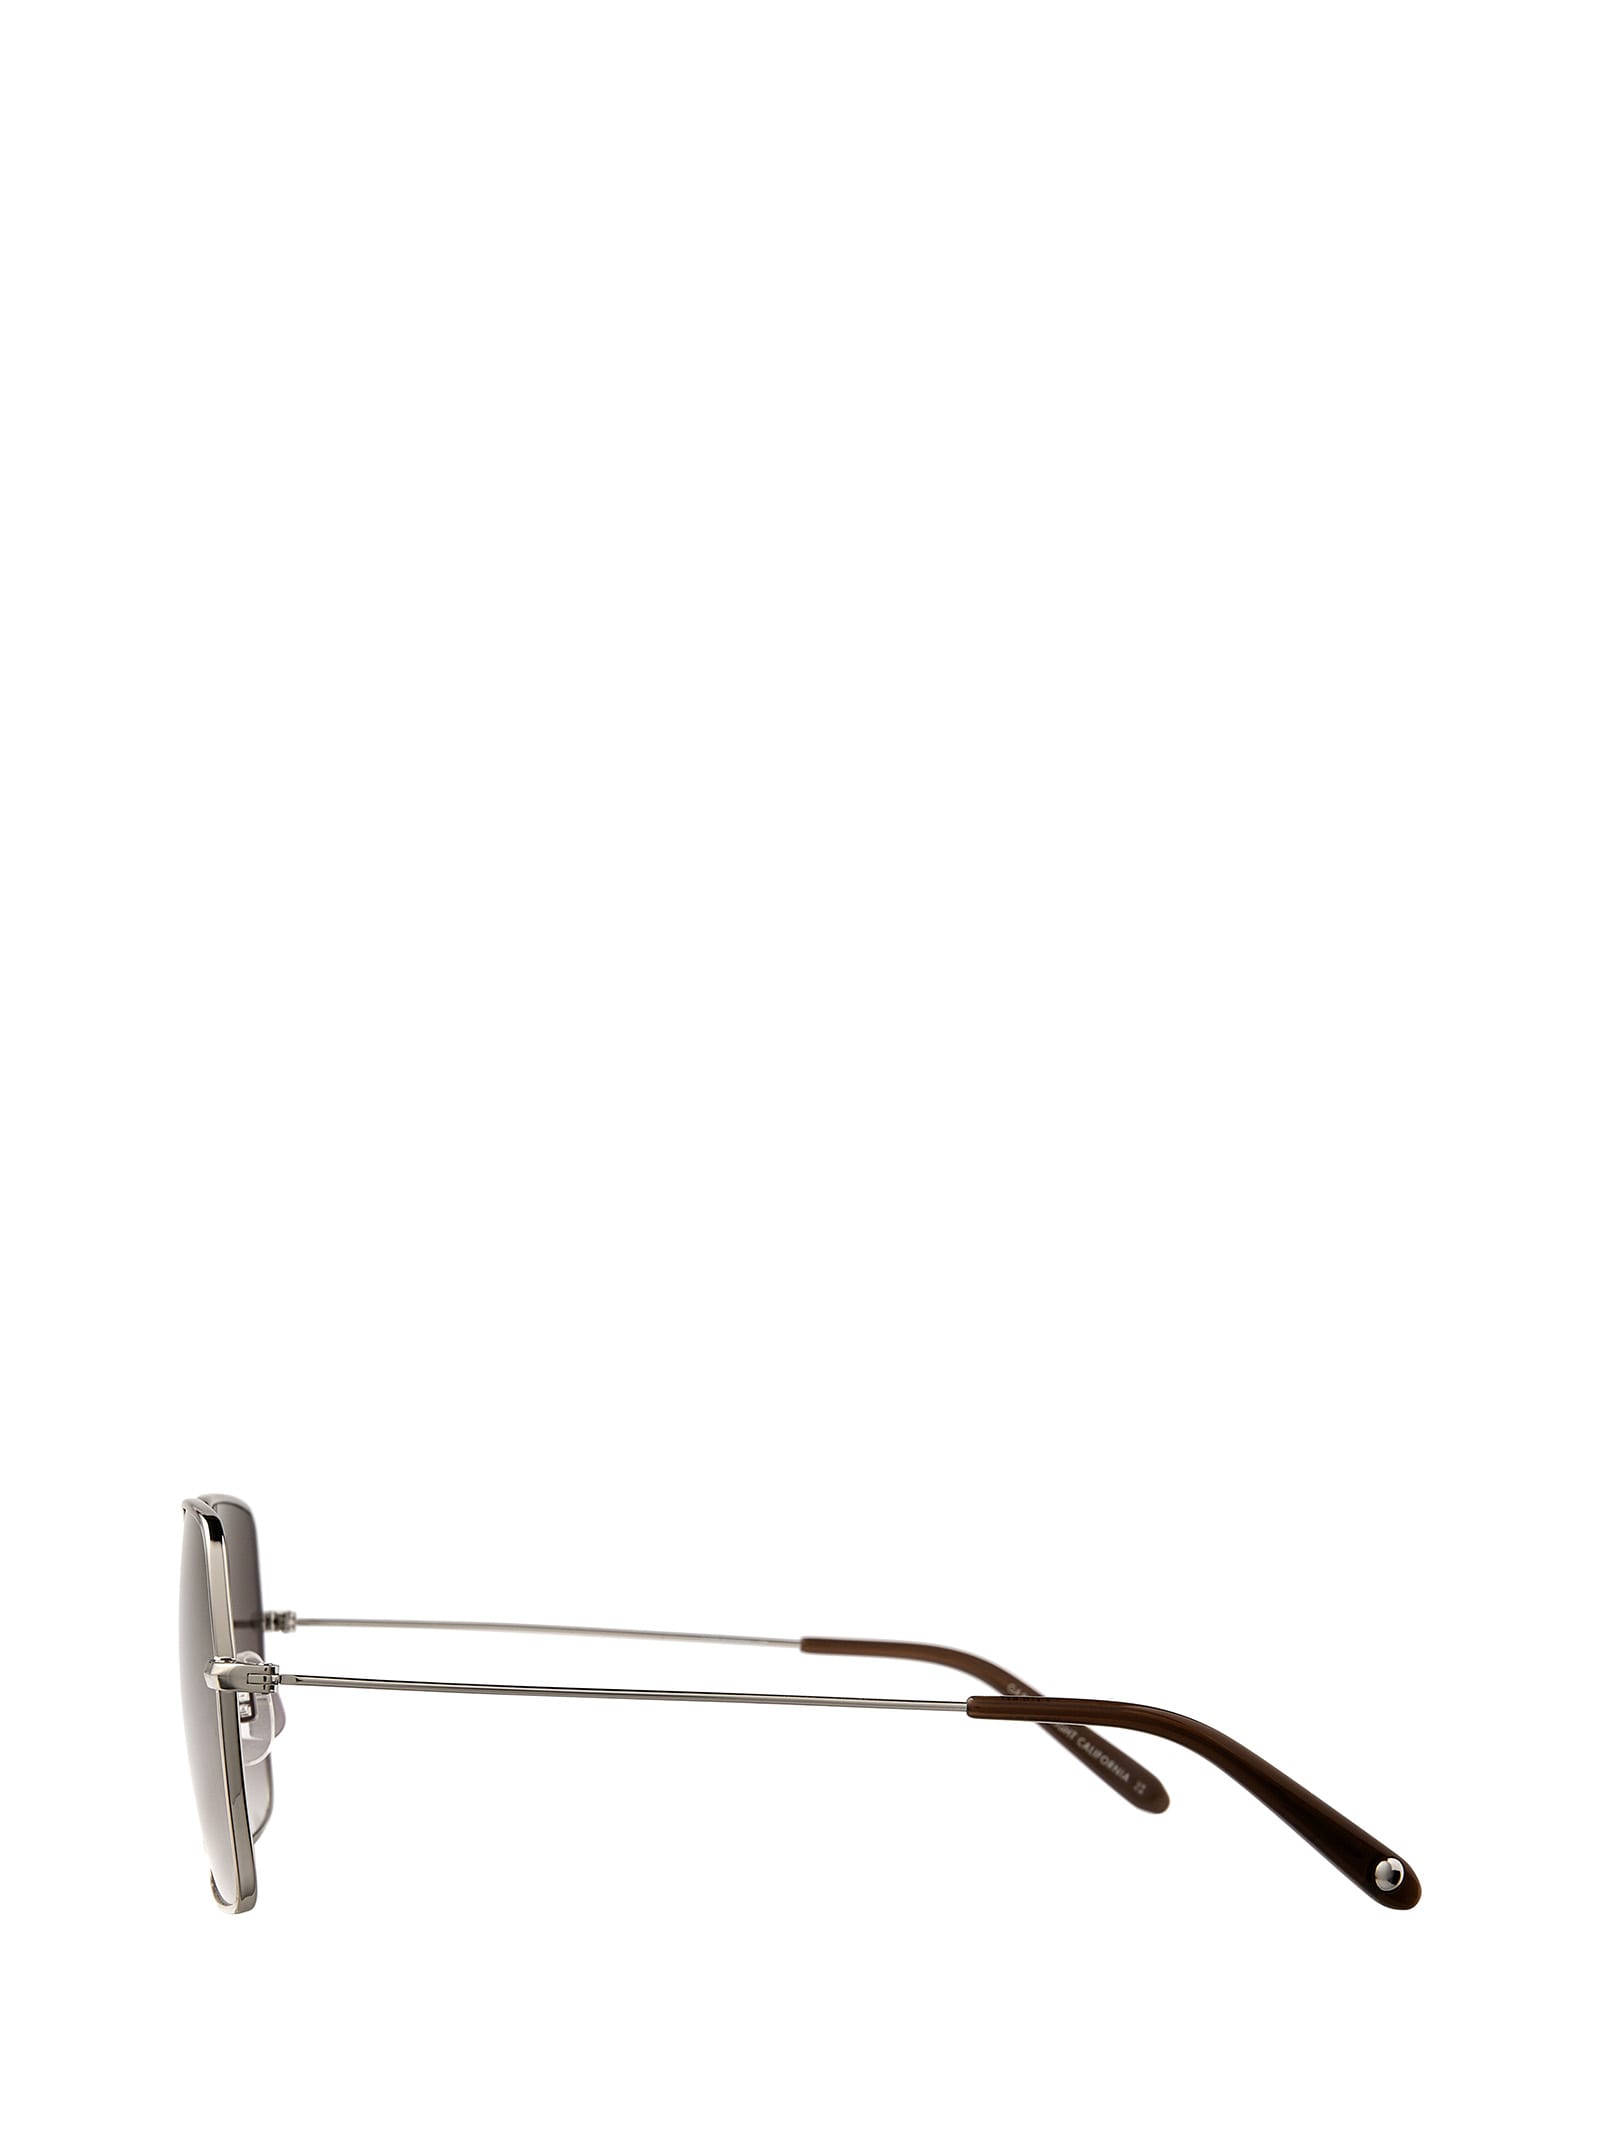 Shop Garrett Leight Meadow Sun Silver-barolo/waning Moon Gradient Sunglasses